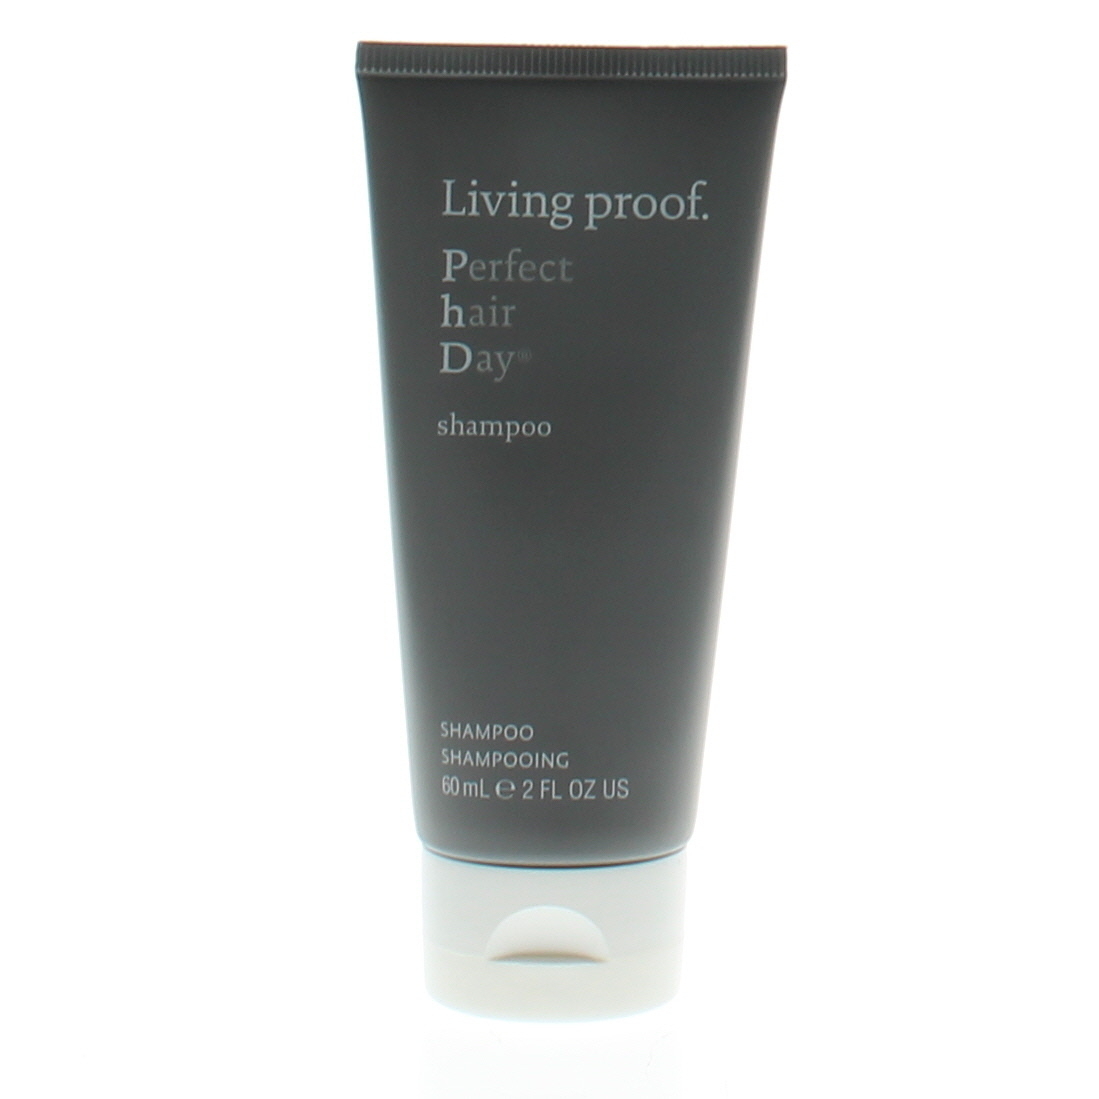 Living Proof Perfect Hair Day (PhD) Shampoo 2oz